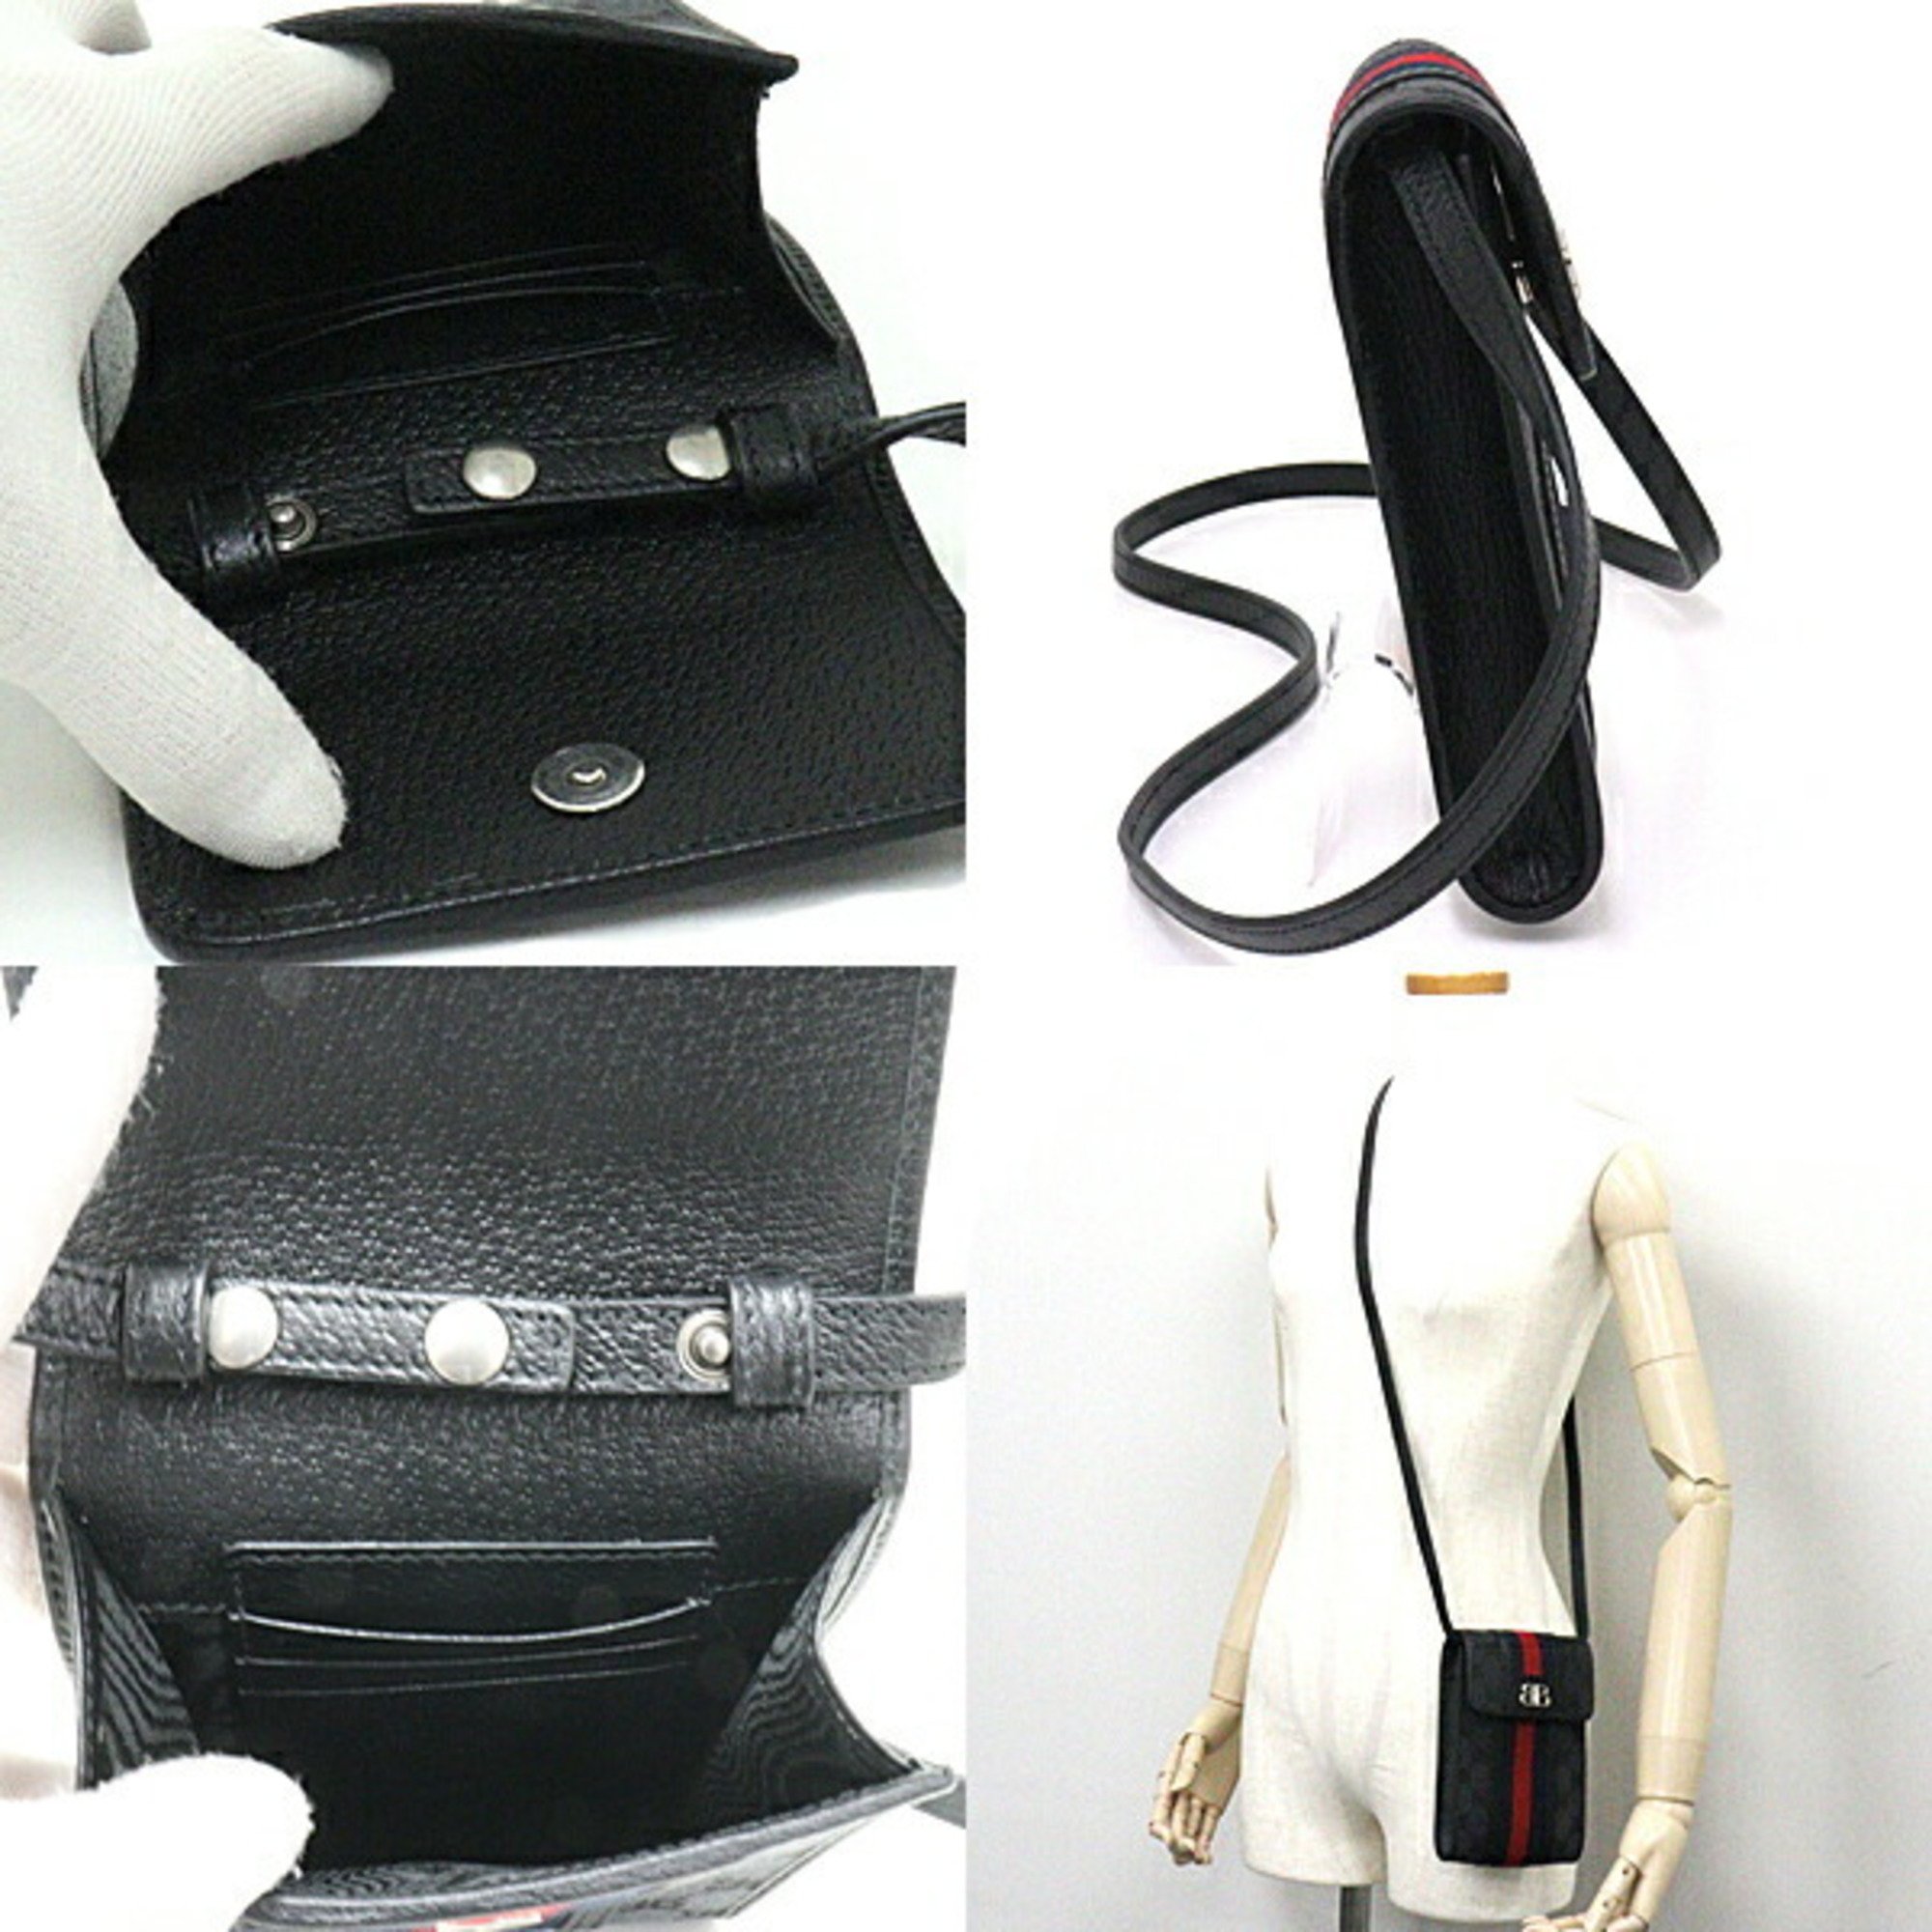 BALENCIAGA GUCCI Balenciaga x Gucci Collaboration The Hacker Project Phone Bag Shoulder Canvas Leather 680130 Black Navy Red